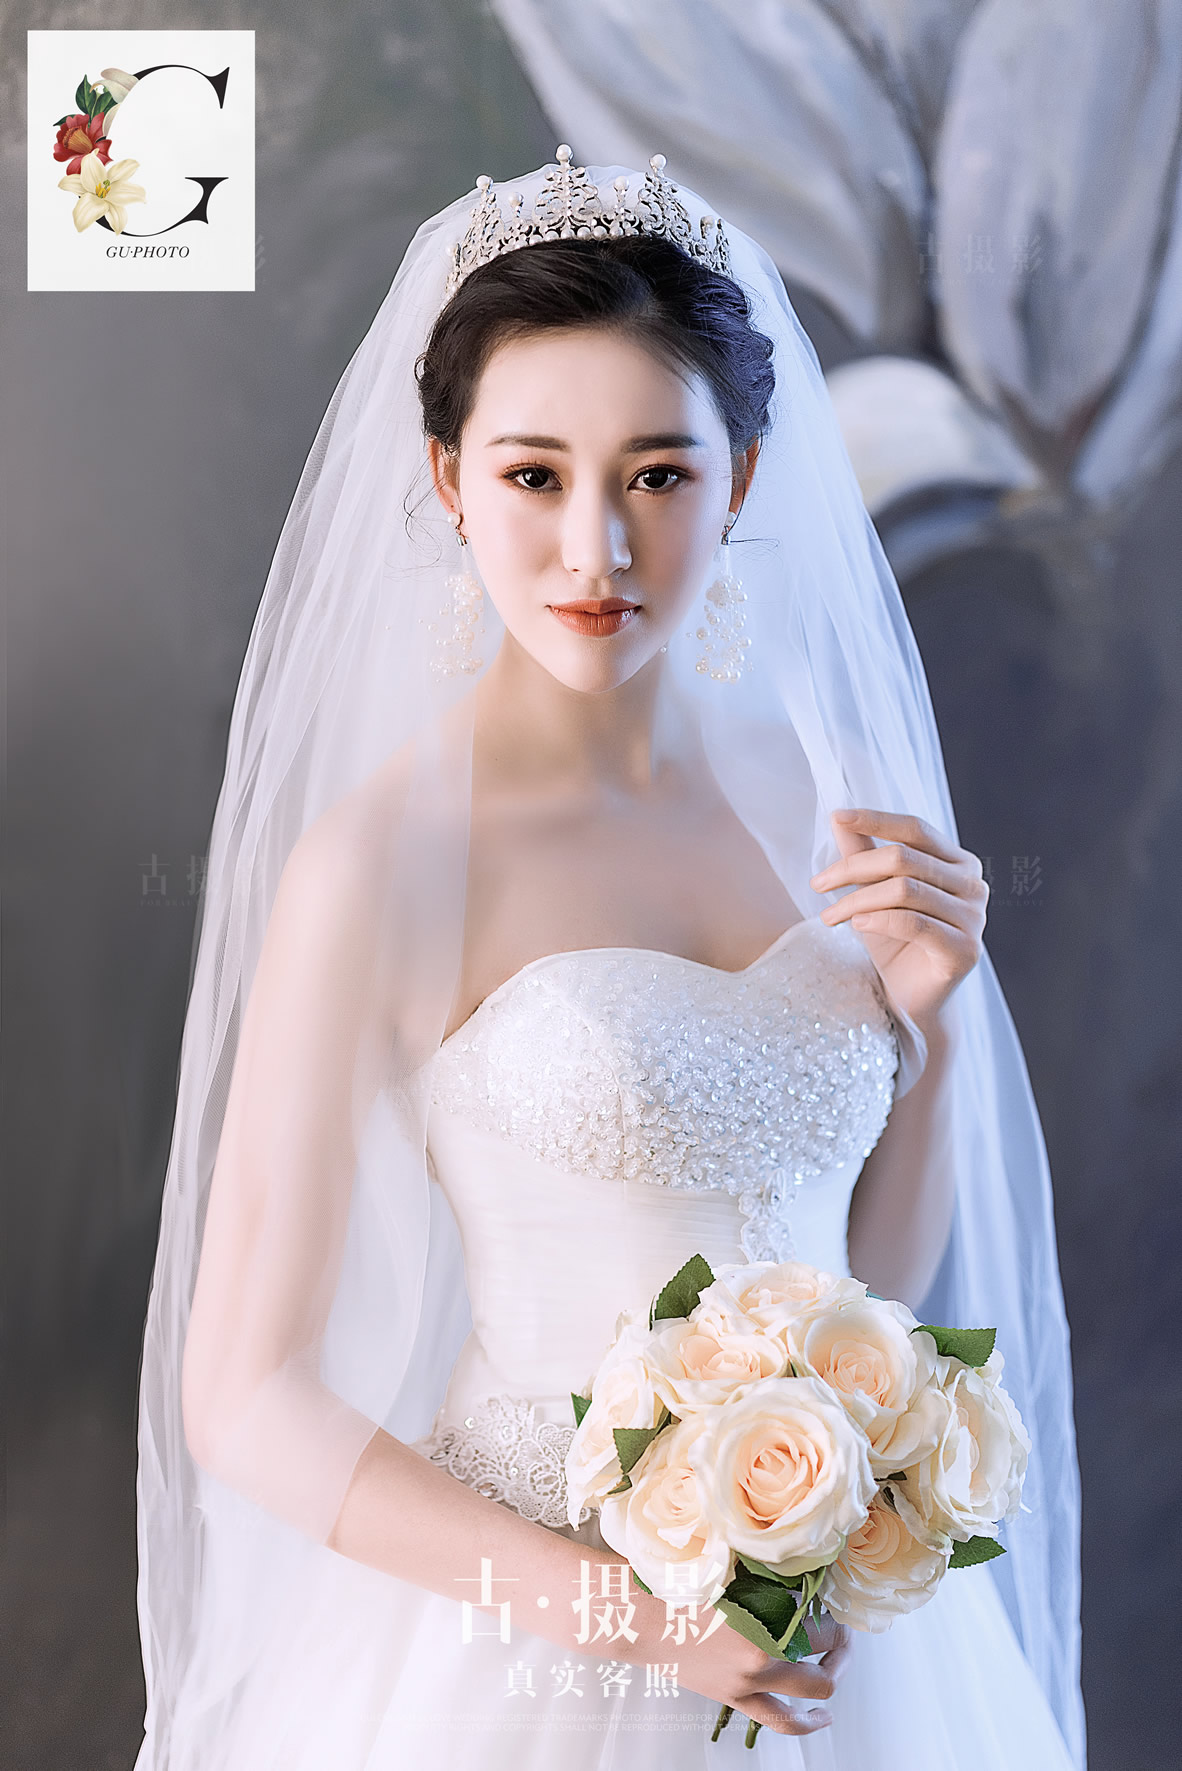 GRACE - 明星范 - 广州婚纱摄影-广州古摄影官网